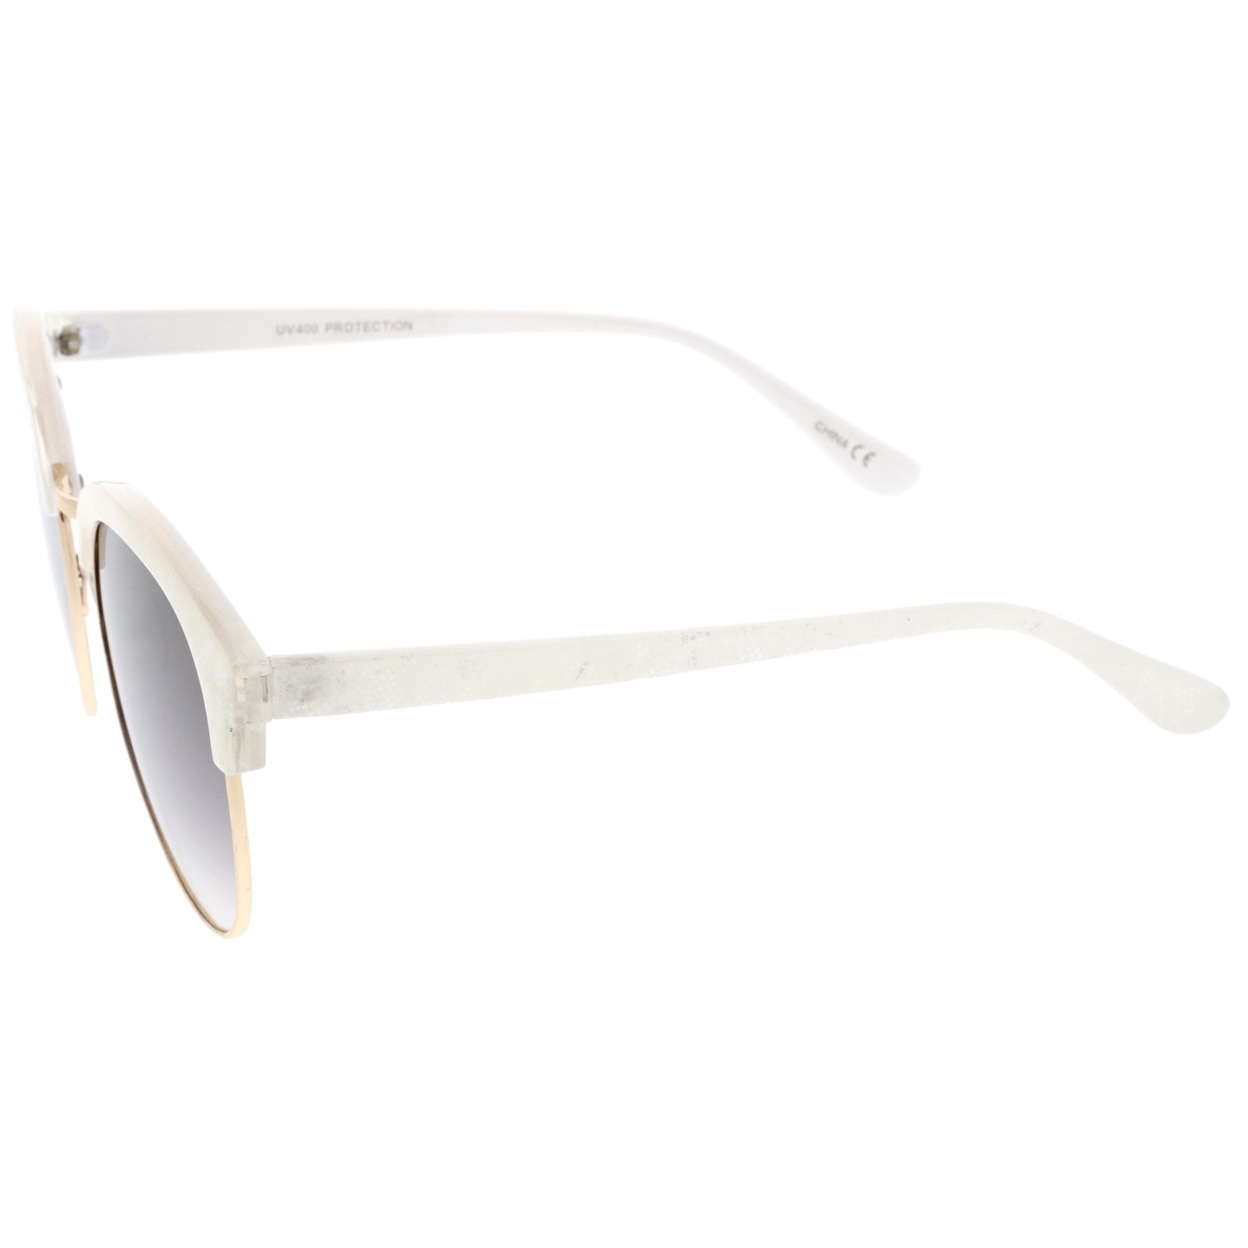 Oversize Metallic Horn Rimmed Colored Mirror Lens Half-Frame Sunglasses 58mm - Green Gold / Blue Mirror